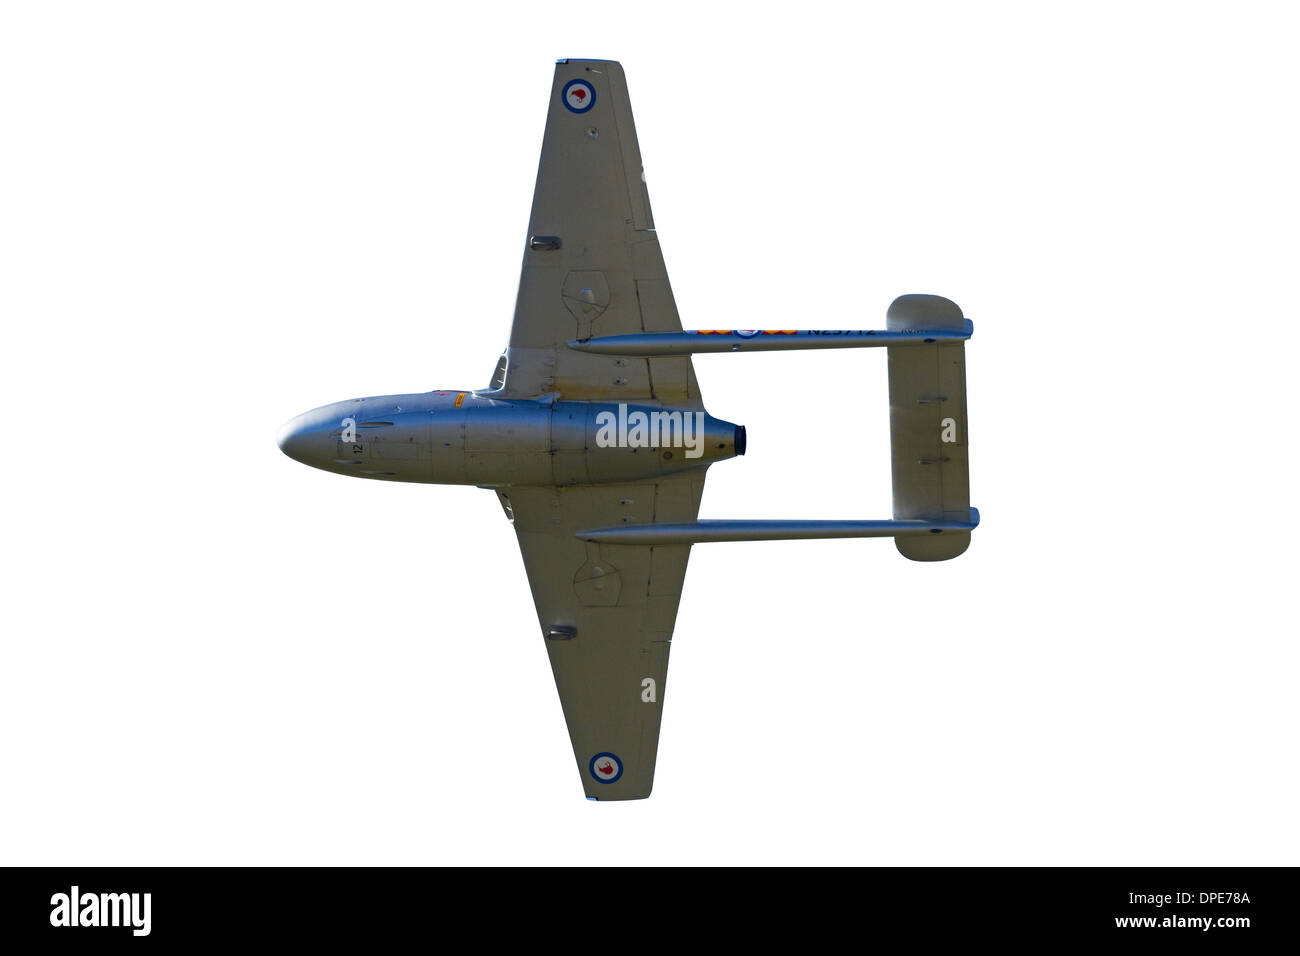 Cutout of de Havilland Vampire Jet Attack Aircraft Stock Photo